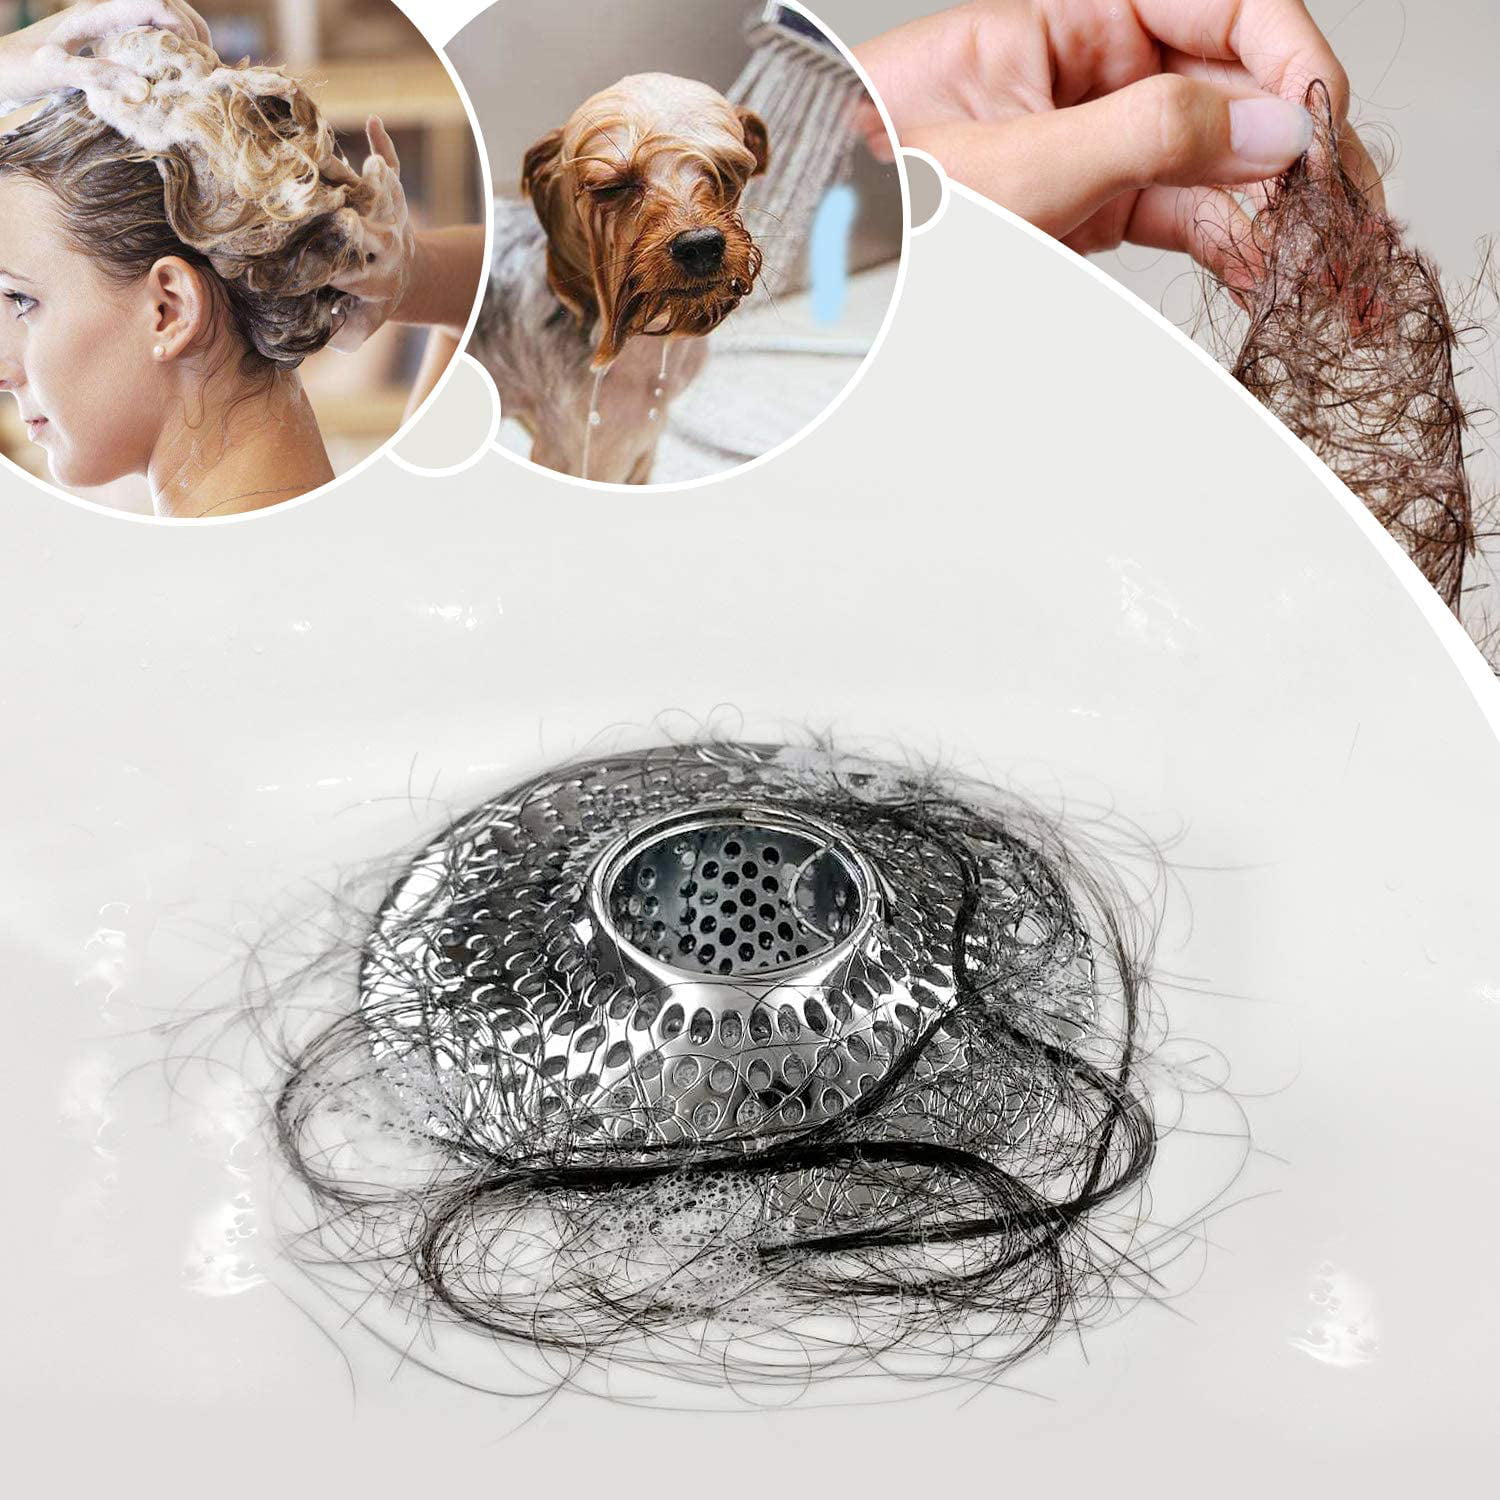 Lekeye Drain Hair Catcher/Bathtub Drain Cover/Drain Protector for Pop-Up & Regular Drains(Patented Product), Silver